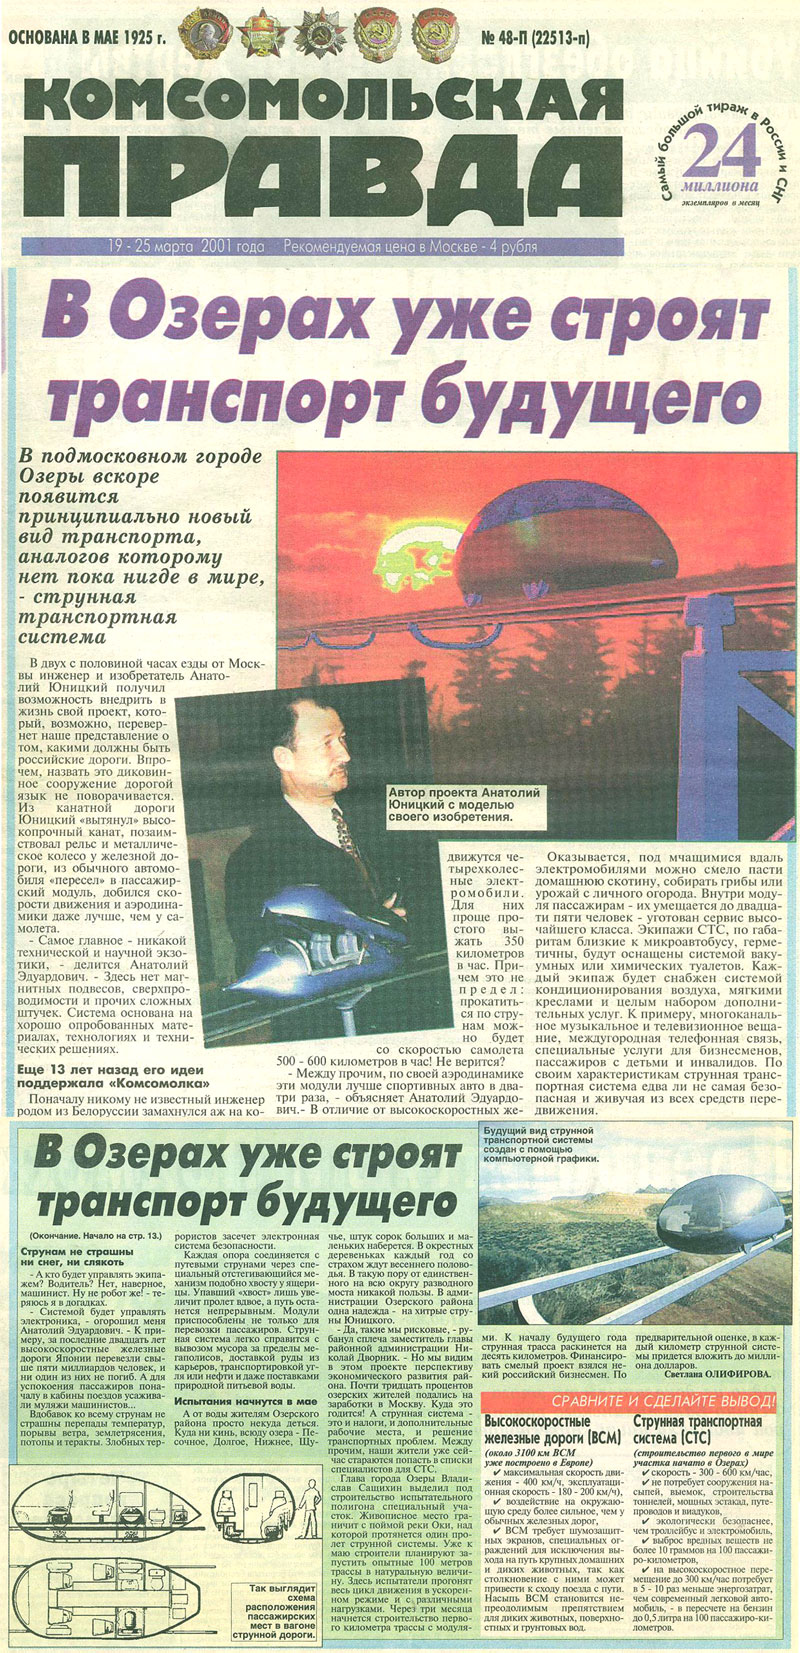 The newspaper Komsomolskaya Pravda: Transport of the future is already under construction in Ozyory